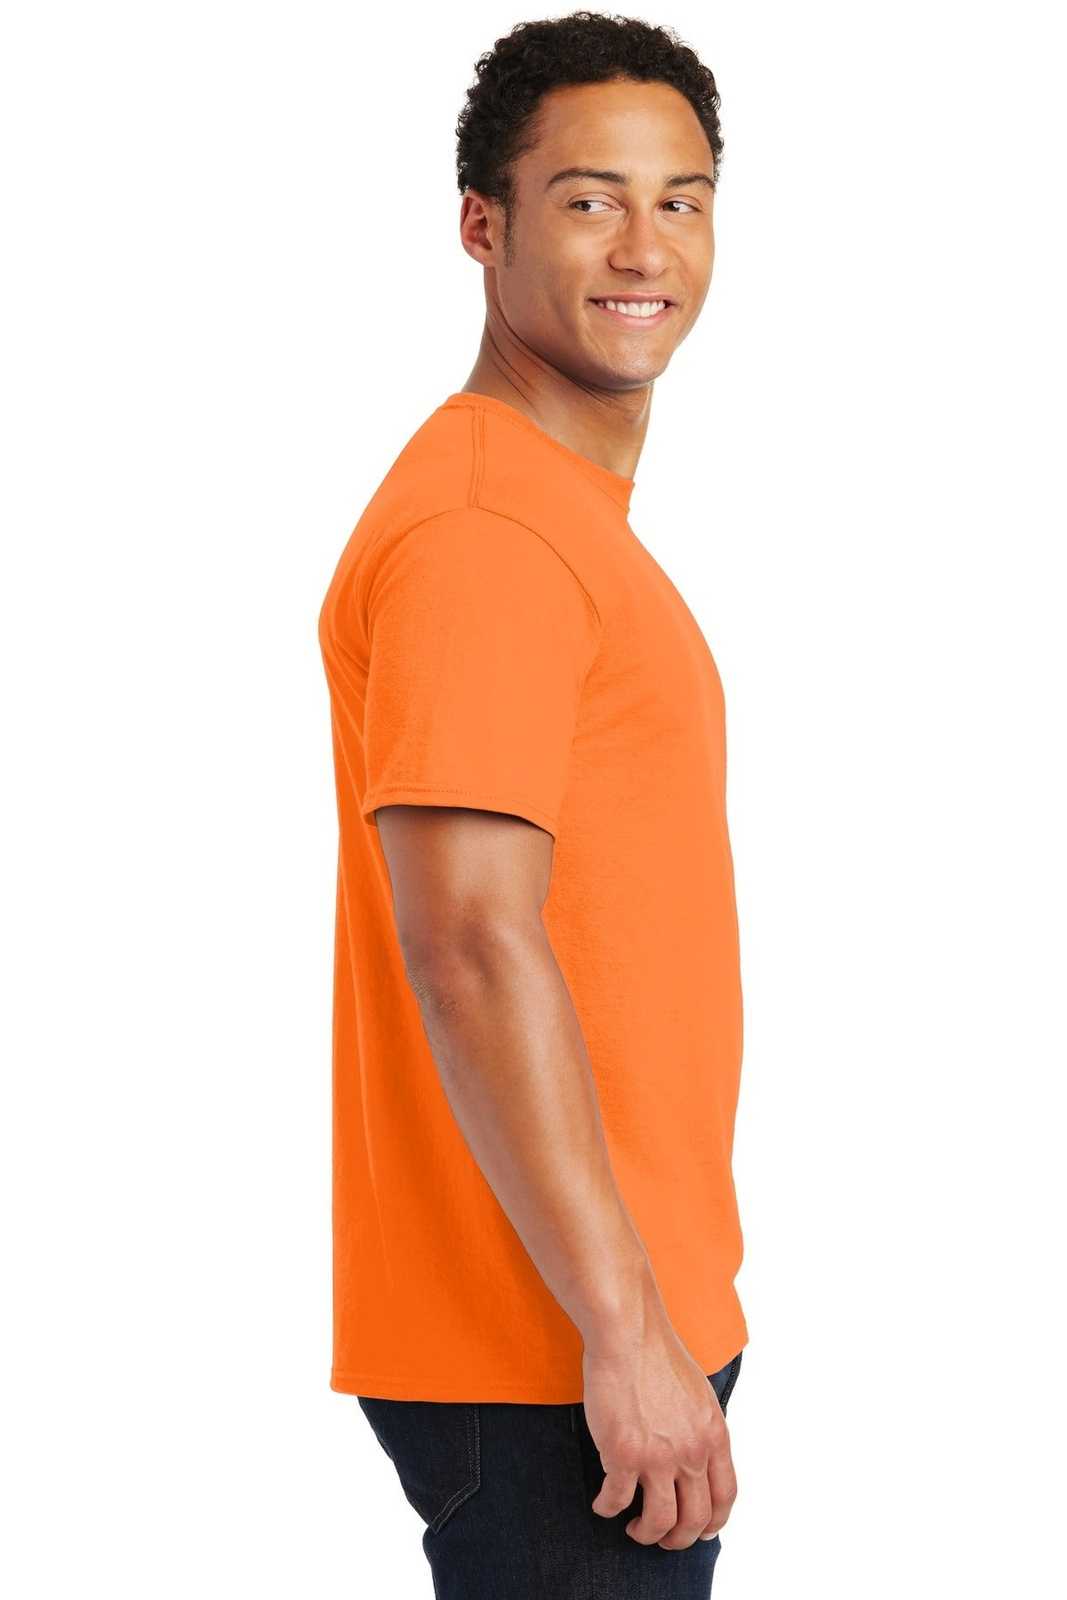 Jerzees 29M Dri-Power Active 50/50 Cotton/Poly T-Shirt - Safety Orange - HIT a Double